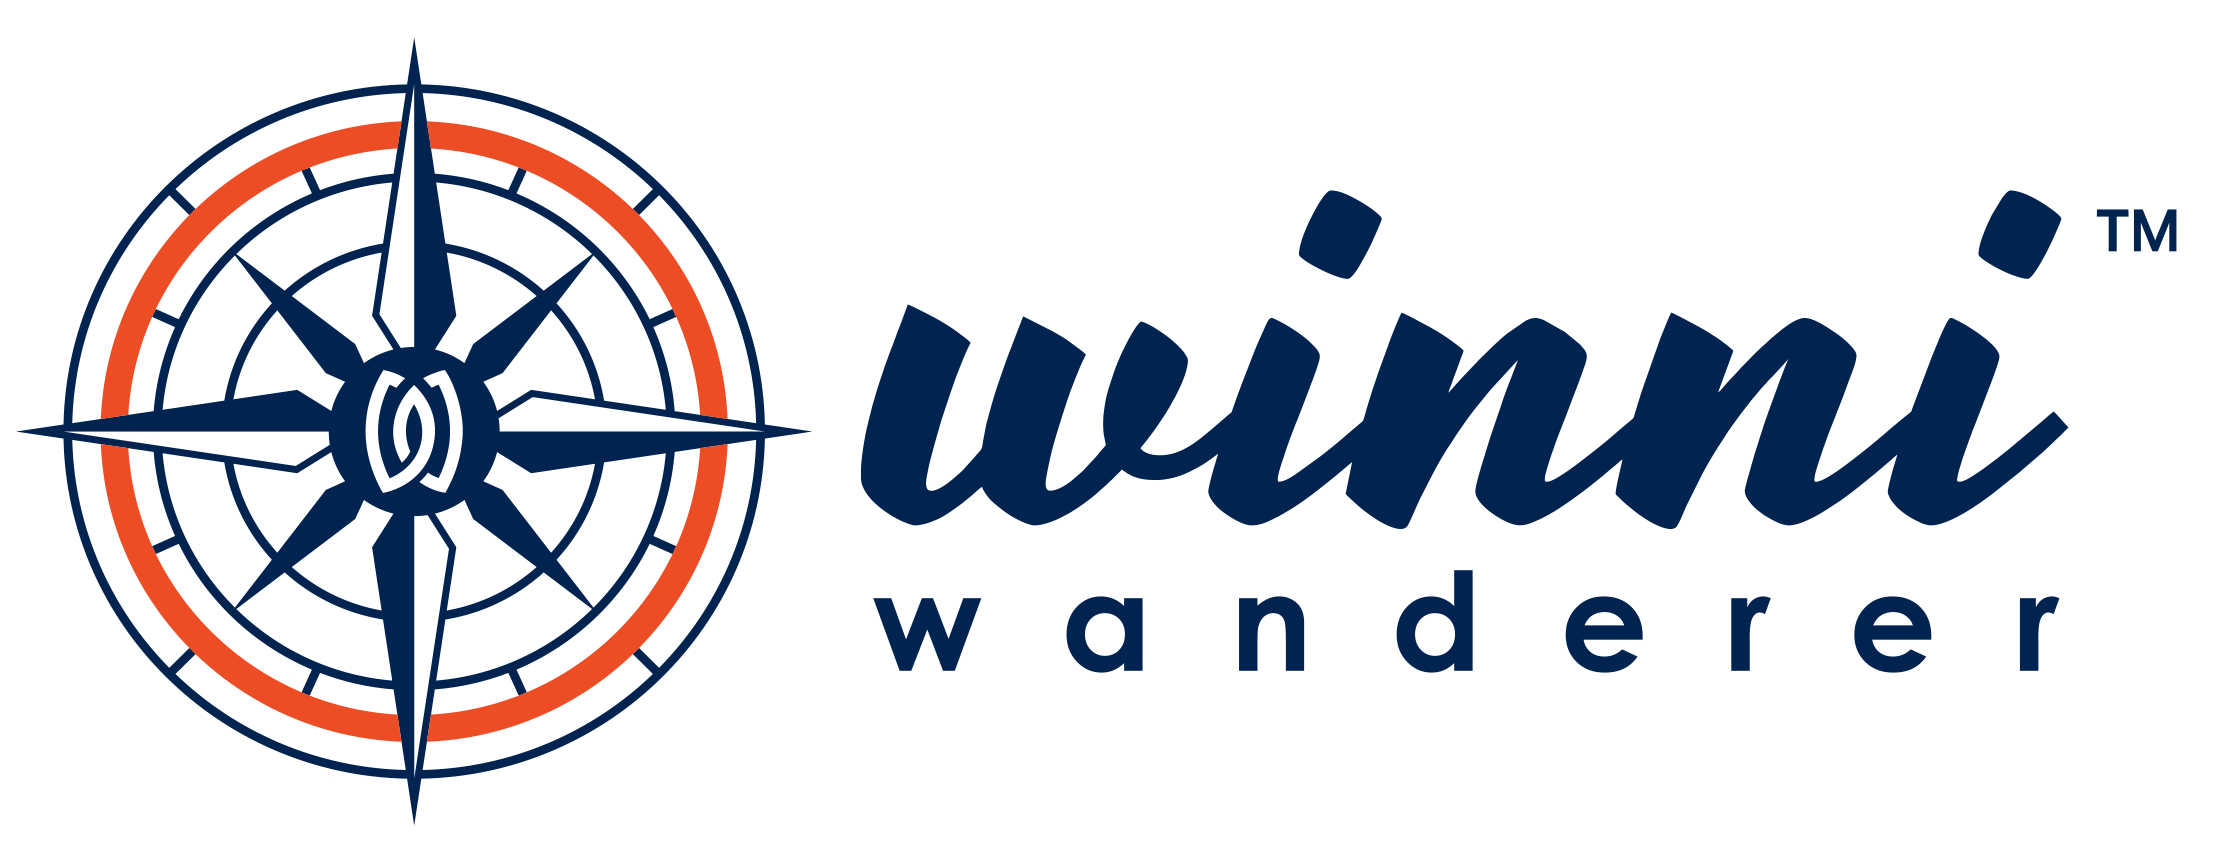 winni wanderer logo